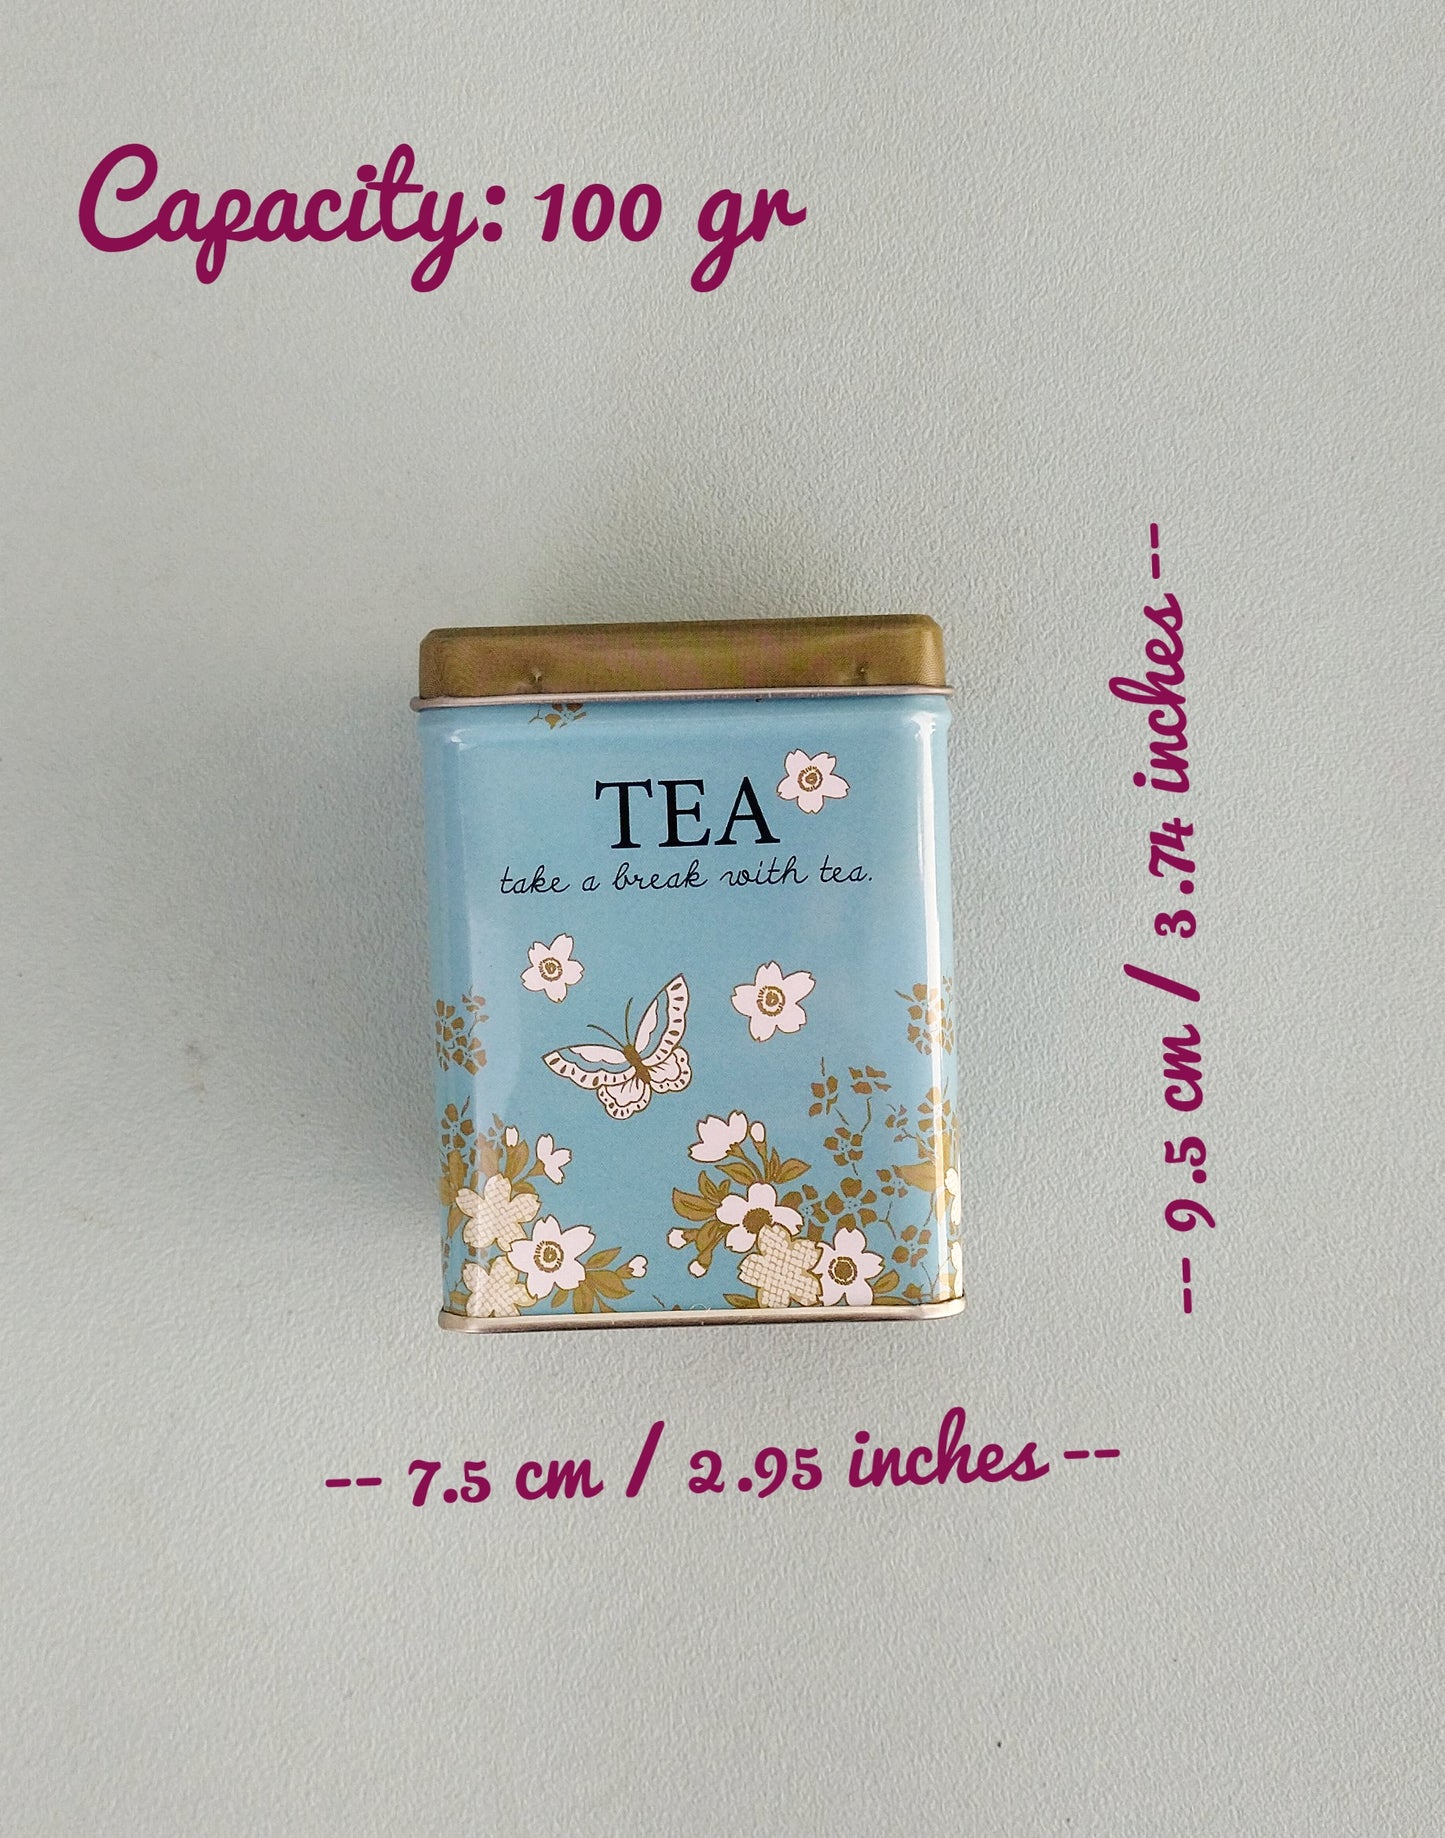 Loose Leaf Tea Tin Box With Lid, Herbal Tea Canister